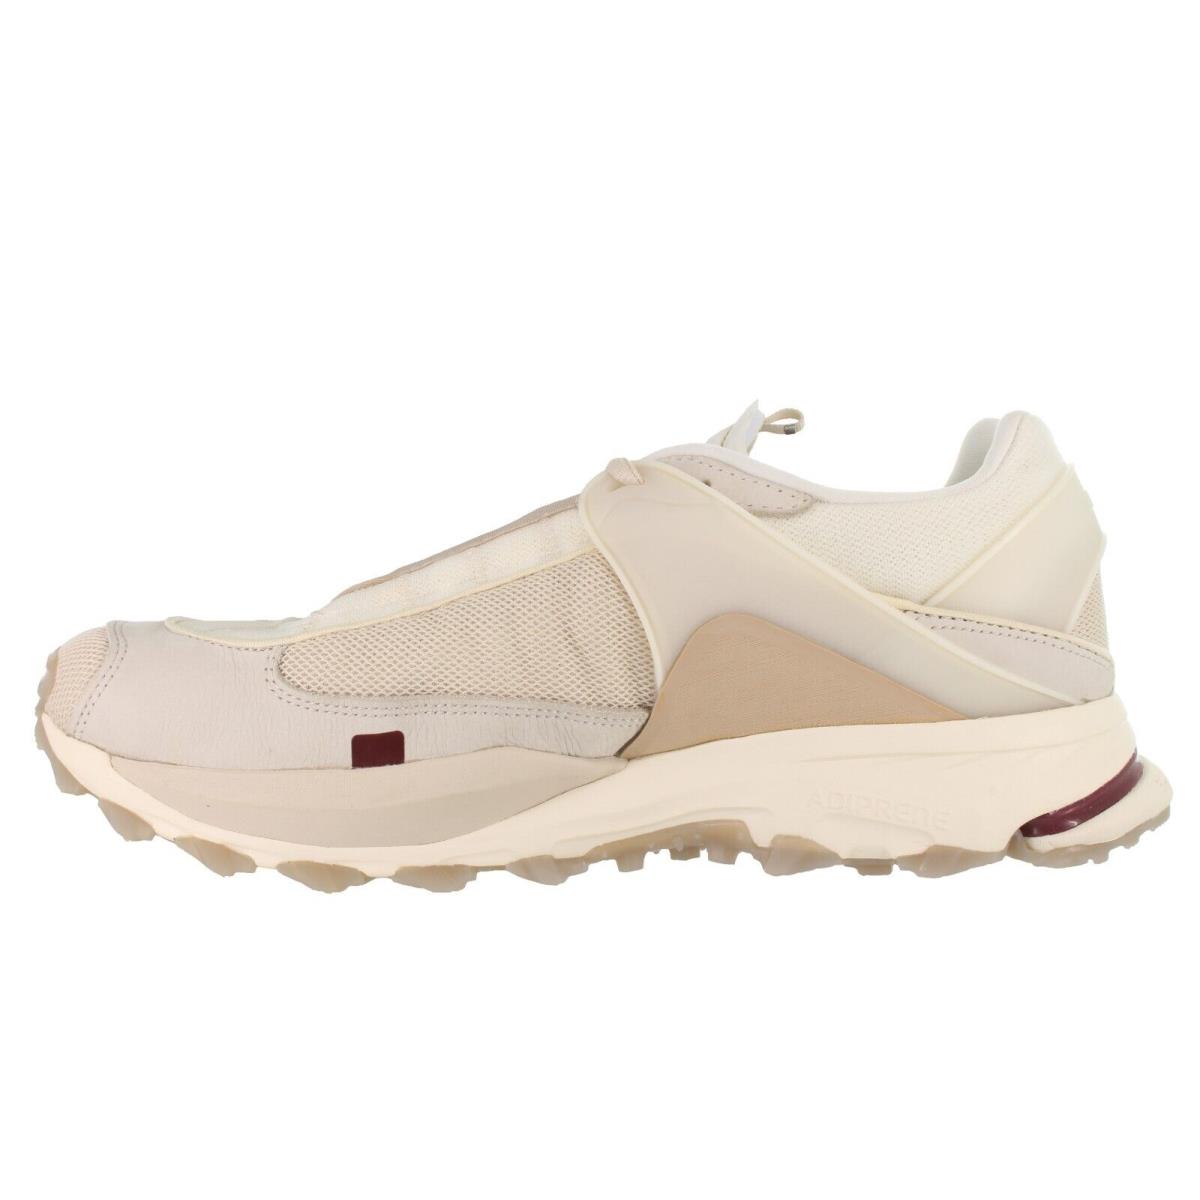 Adidas Men`s Originals X Oamc Type 0-5 Off White Shoes Size 13 - Off White, Tan, Supplier Colour